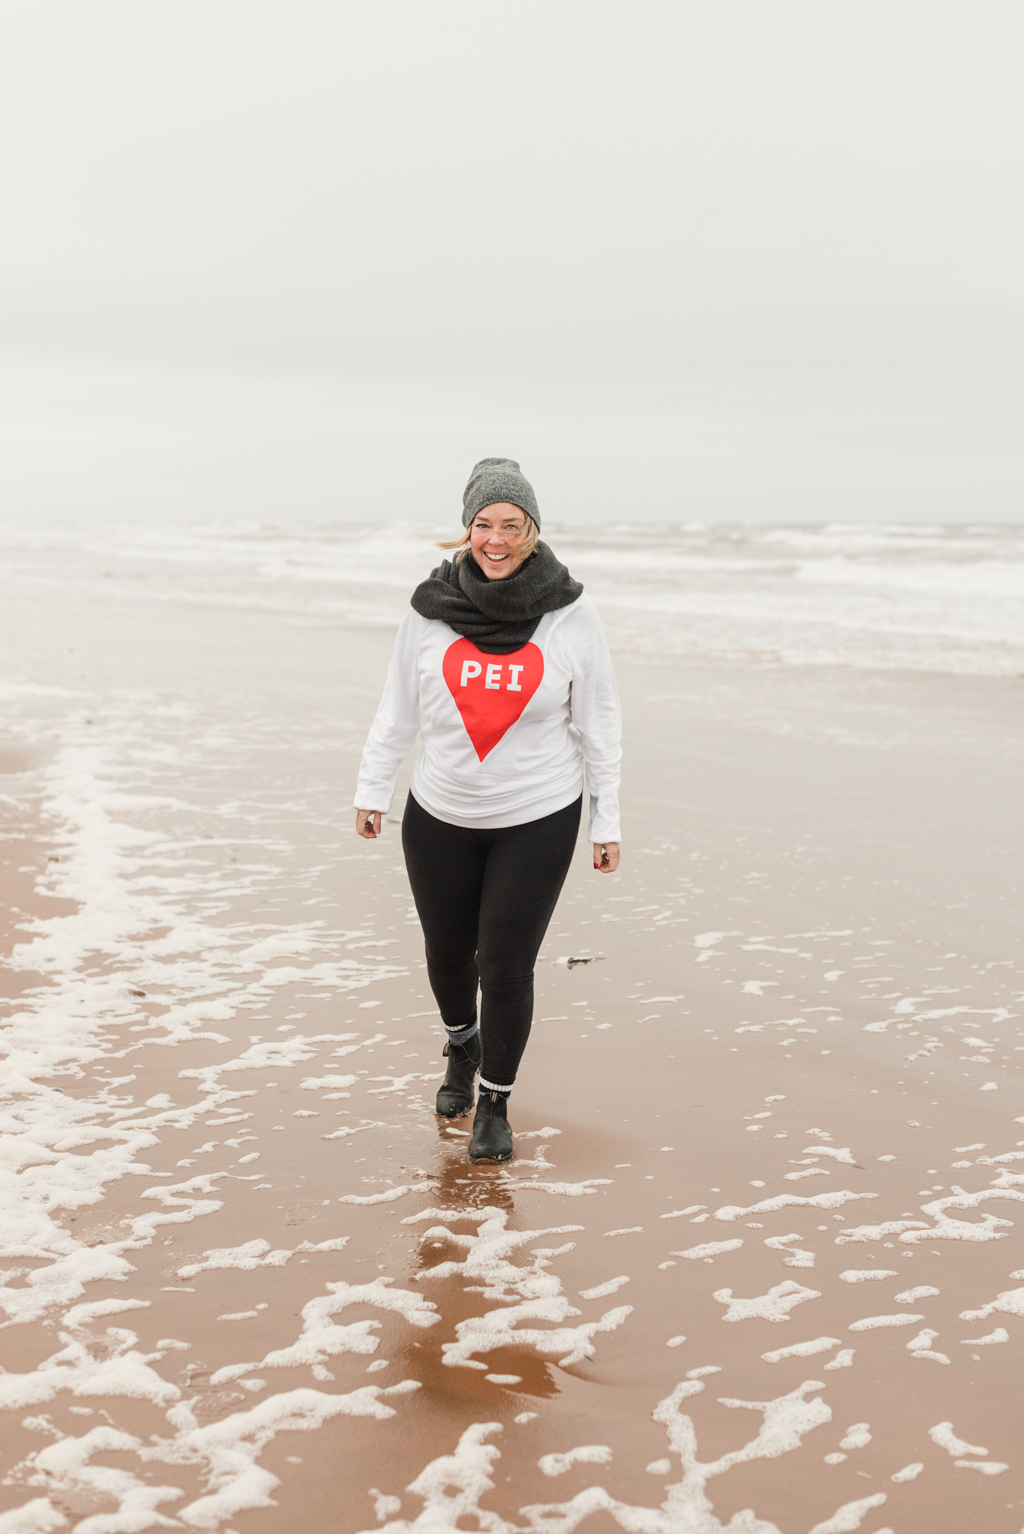 PEI Heart Sweatshirt - Prince Edward Island - Brackley Beach - Rachel Peters - November 2018 - The Girl From Away.jpg